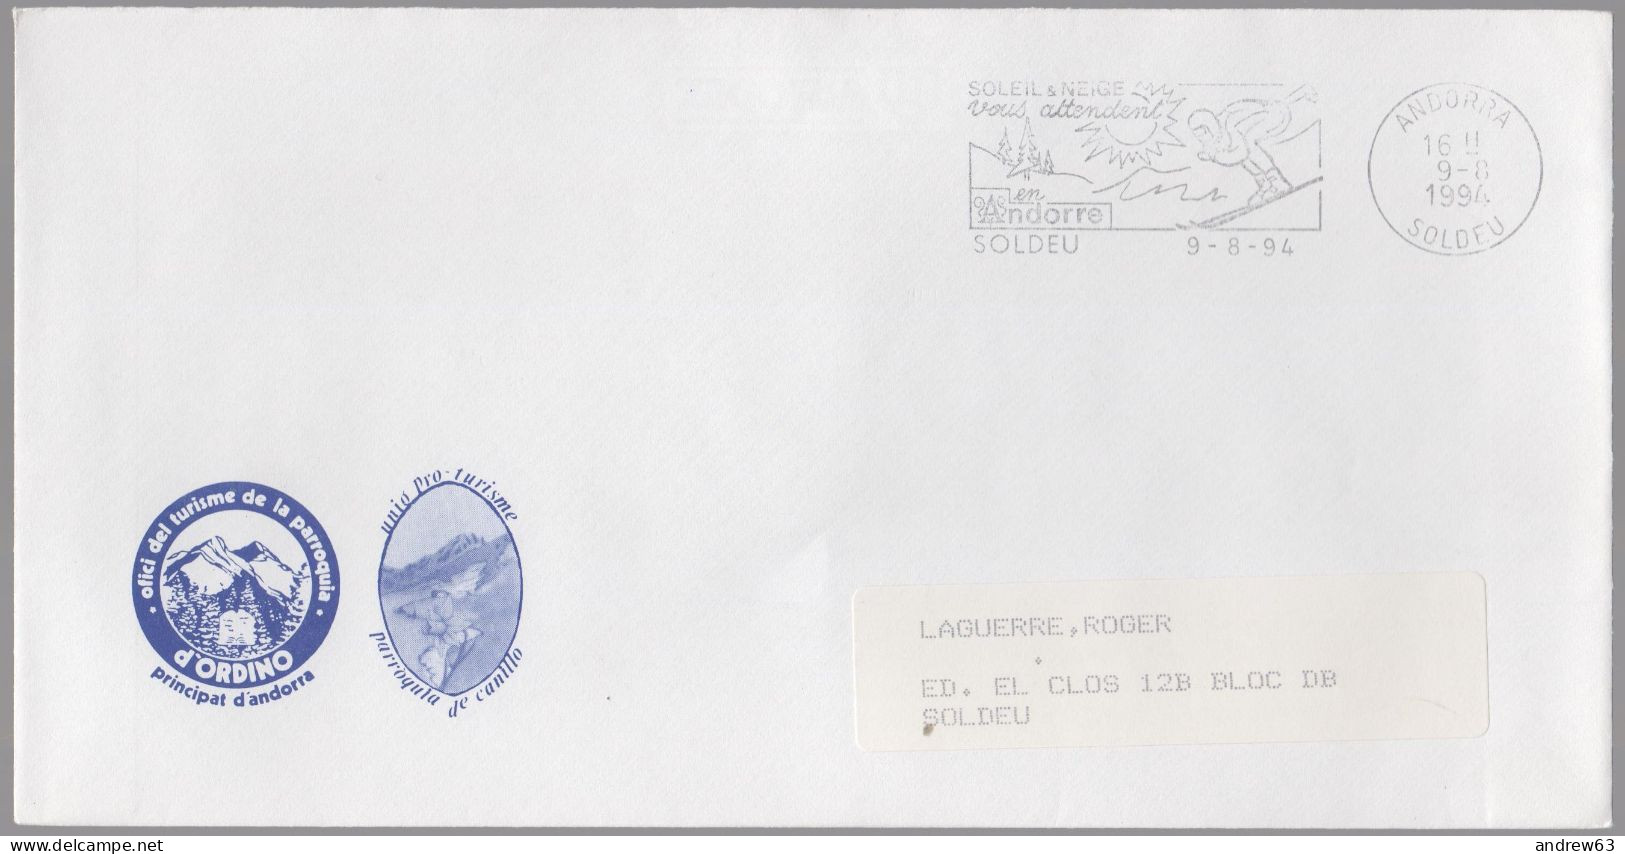 ANDORRA - ANDORRE - 1994 - Lettre En Franchise + Flamme - Viaggiata Da Soldeu Per Soldeu - Lettres & Documents